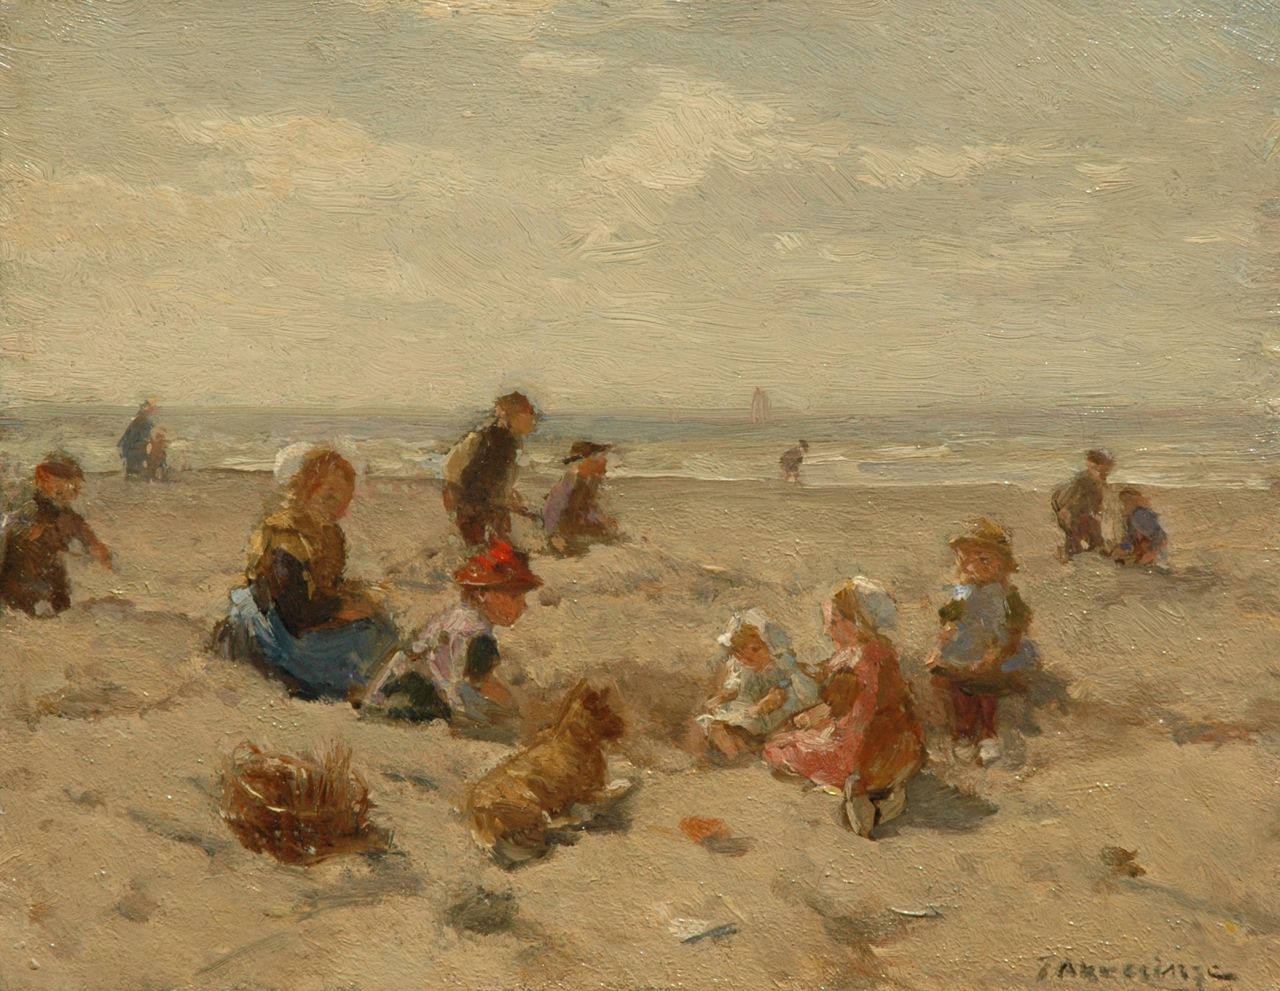 Akkeringa J.E.H.  | 'Johannes Evert' Hendrik Akkeringa, Children playing on a beach, oil on panel 17.9 x 22.6 cm, signed l.r.